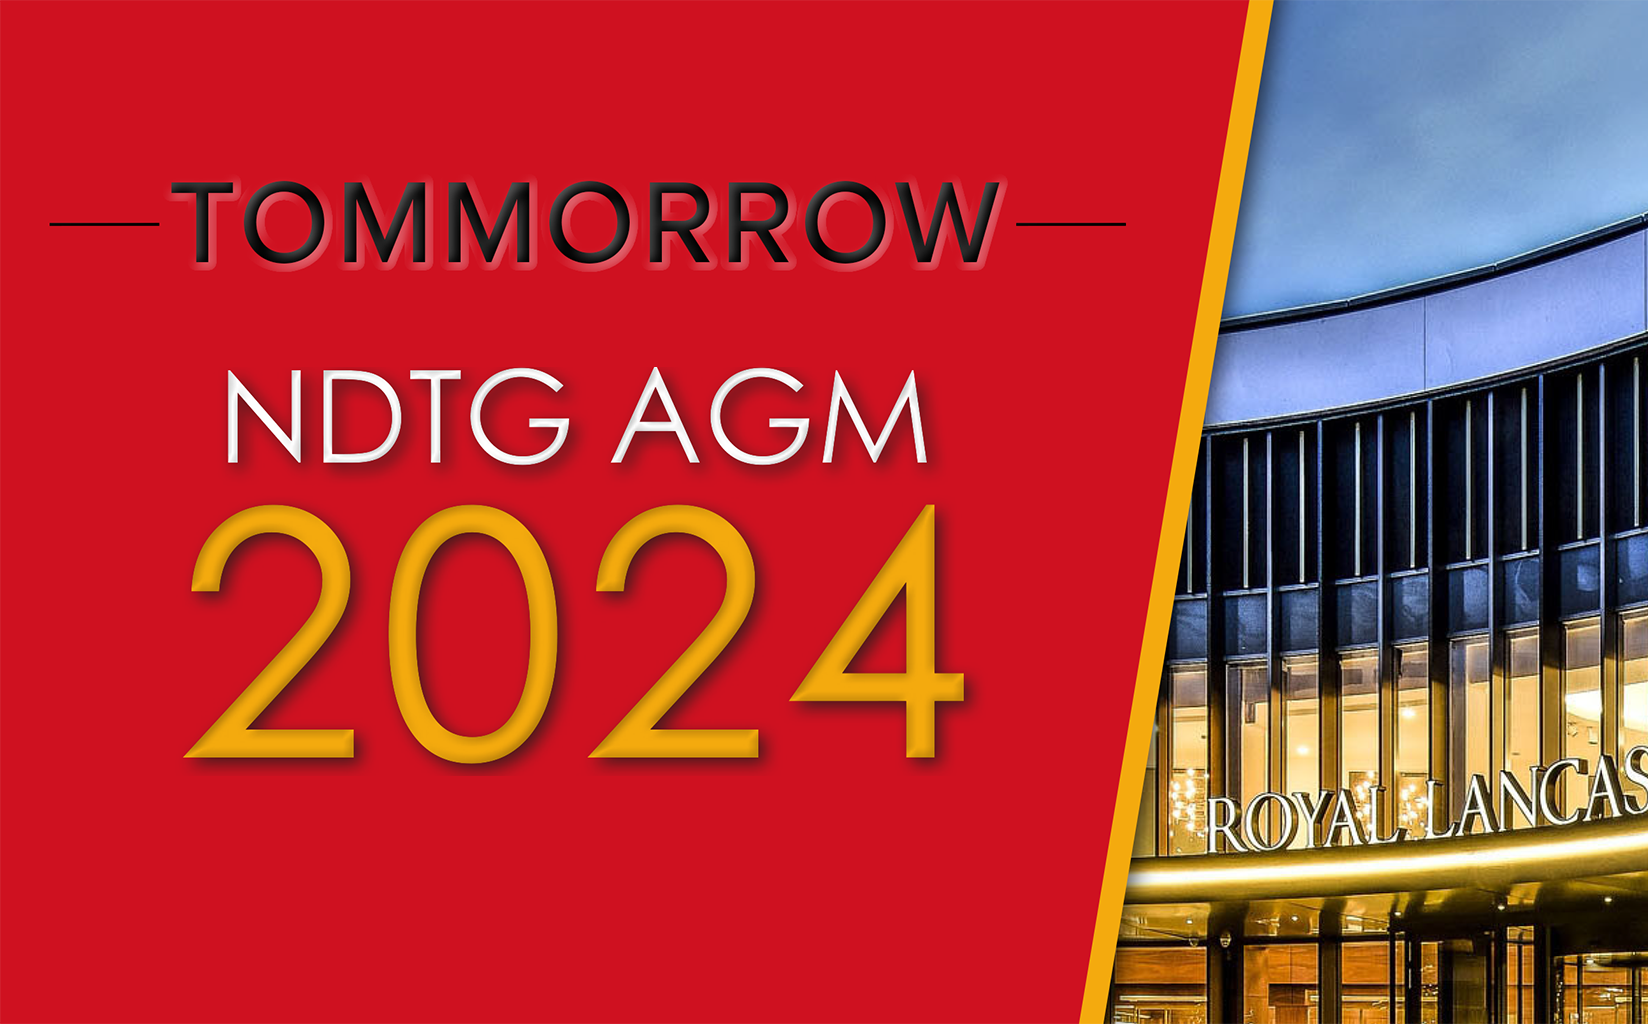 Tomorrow: NDTG AGM 2024